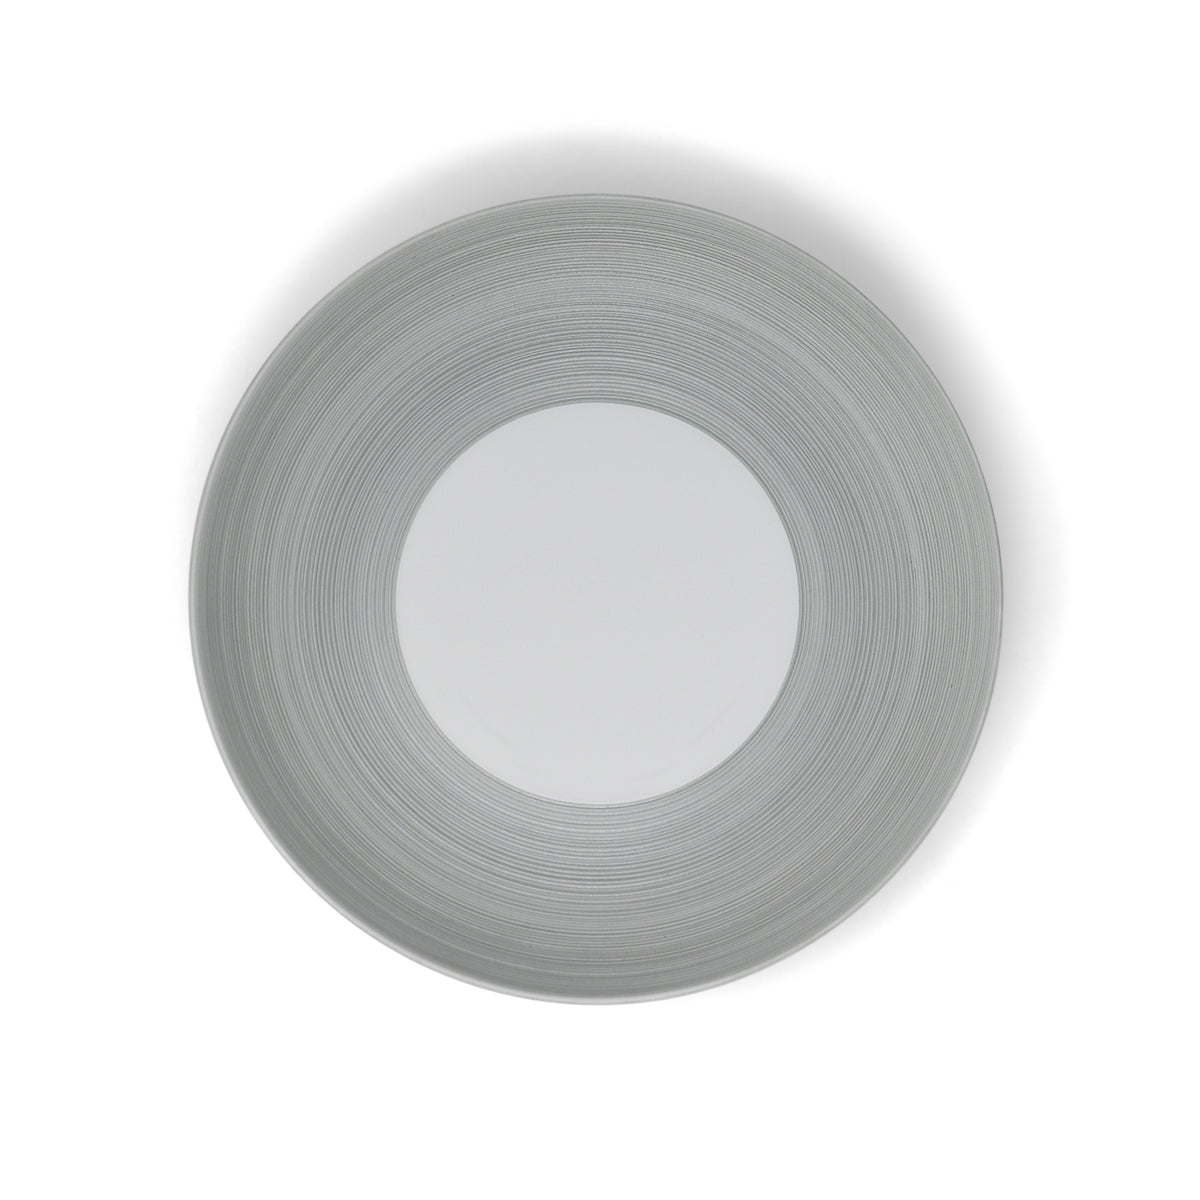 HEMISPHERE Grey - Pasta plate